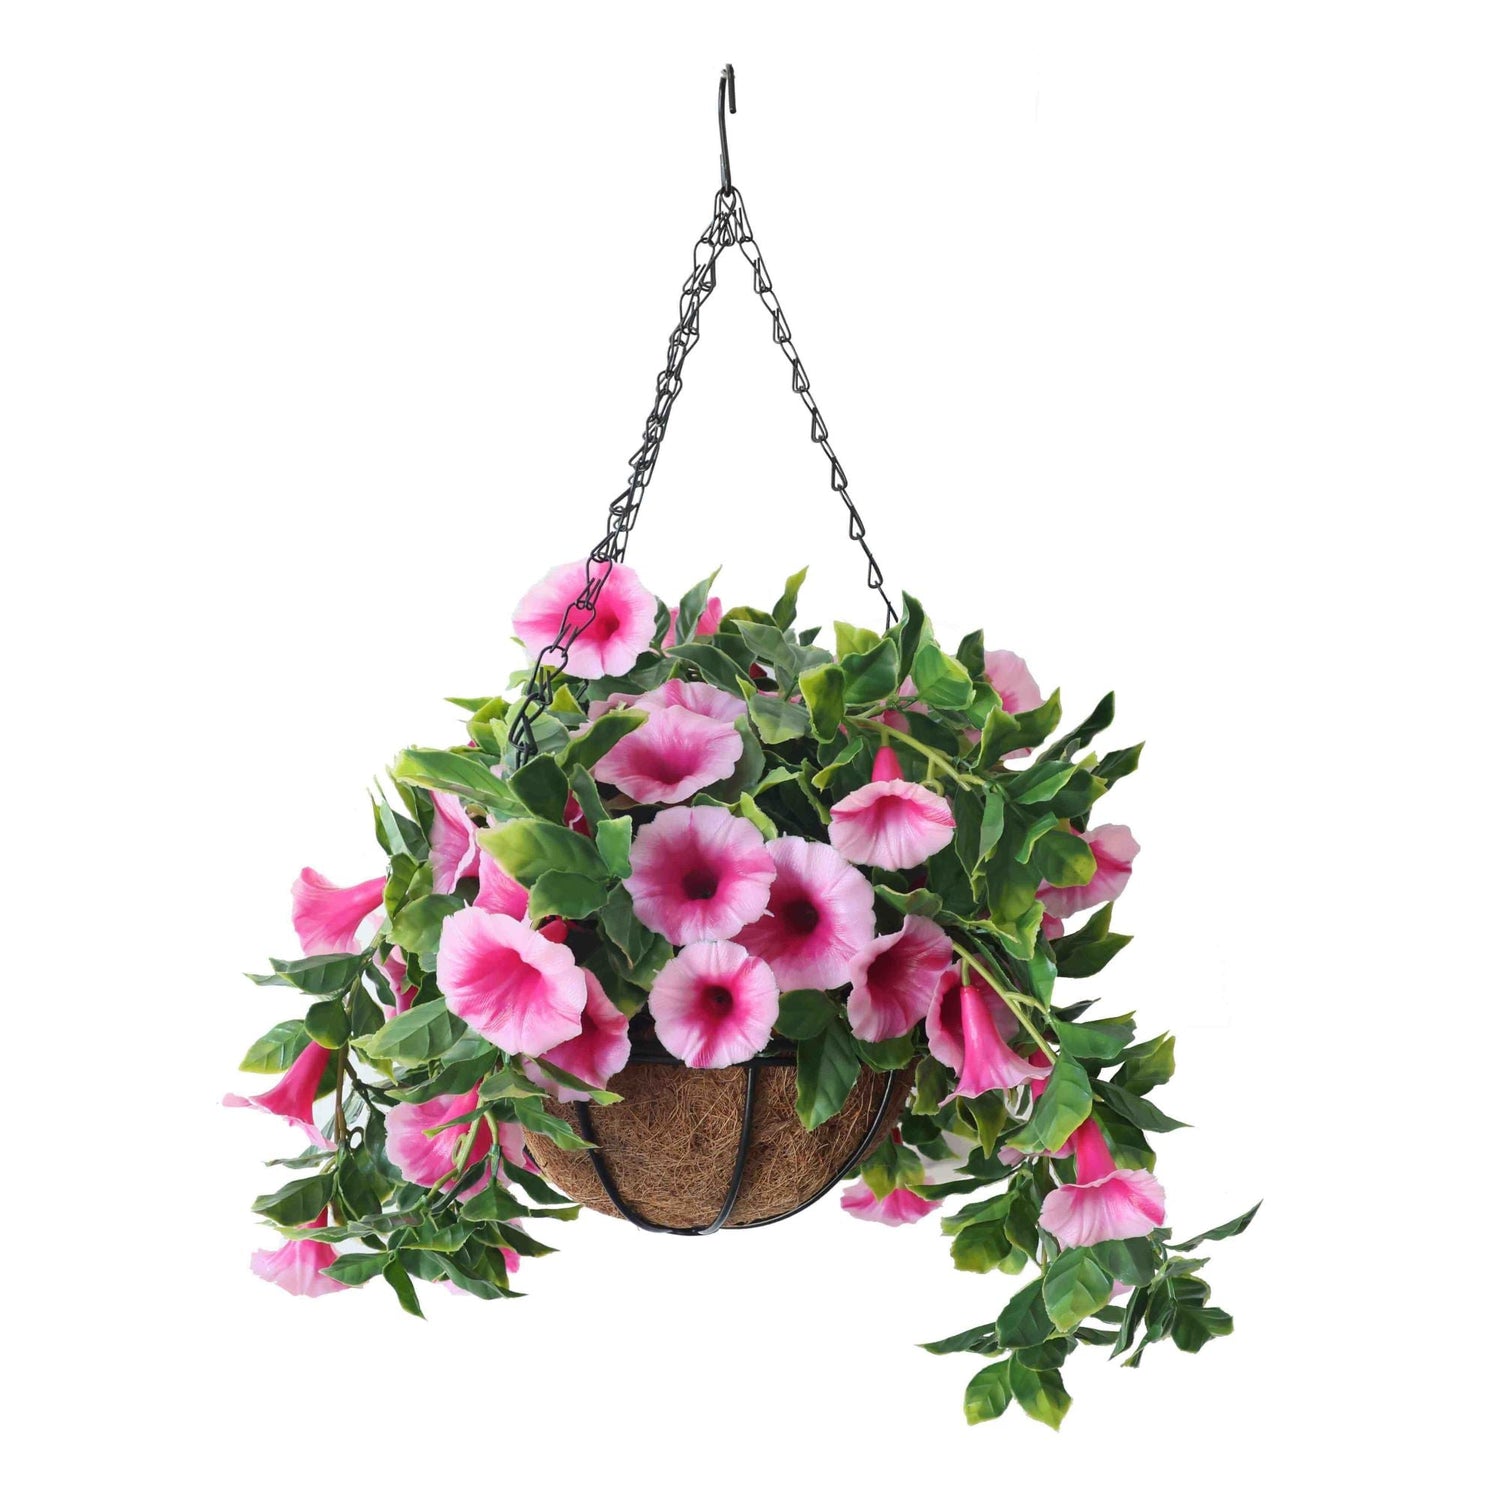 Artificial Petunia Hanging Basket UV Resistant 28cm - Designer Vertical Gardens artificial hanging ferns Flowering plants